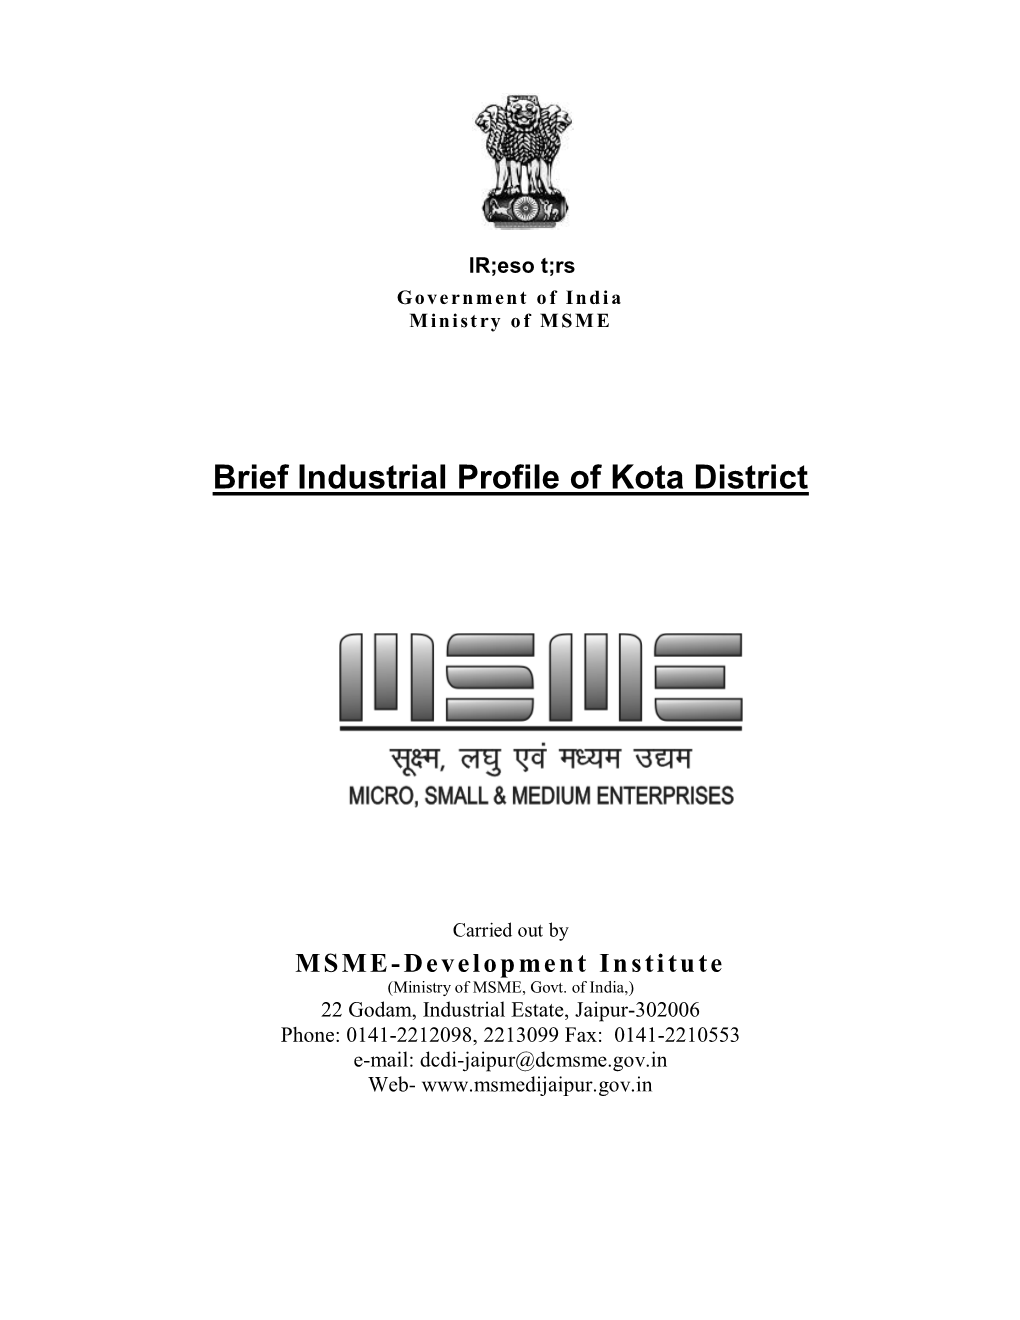 Brief Industrial Profile of Kota District